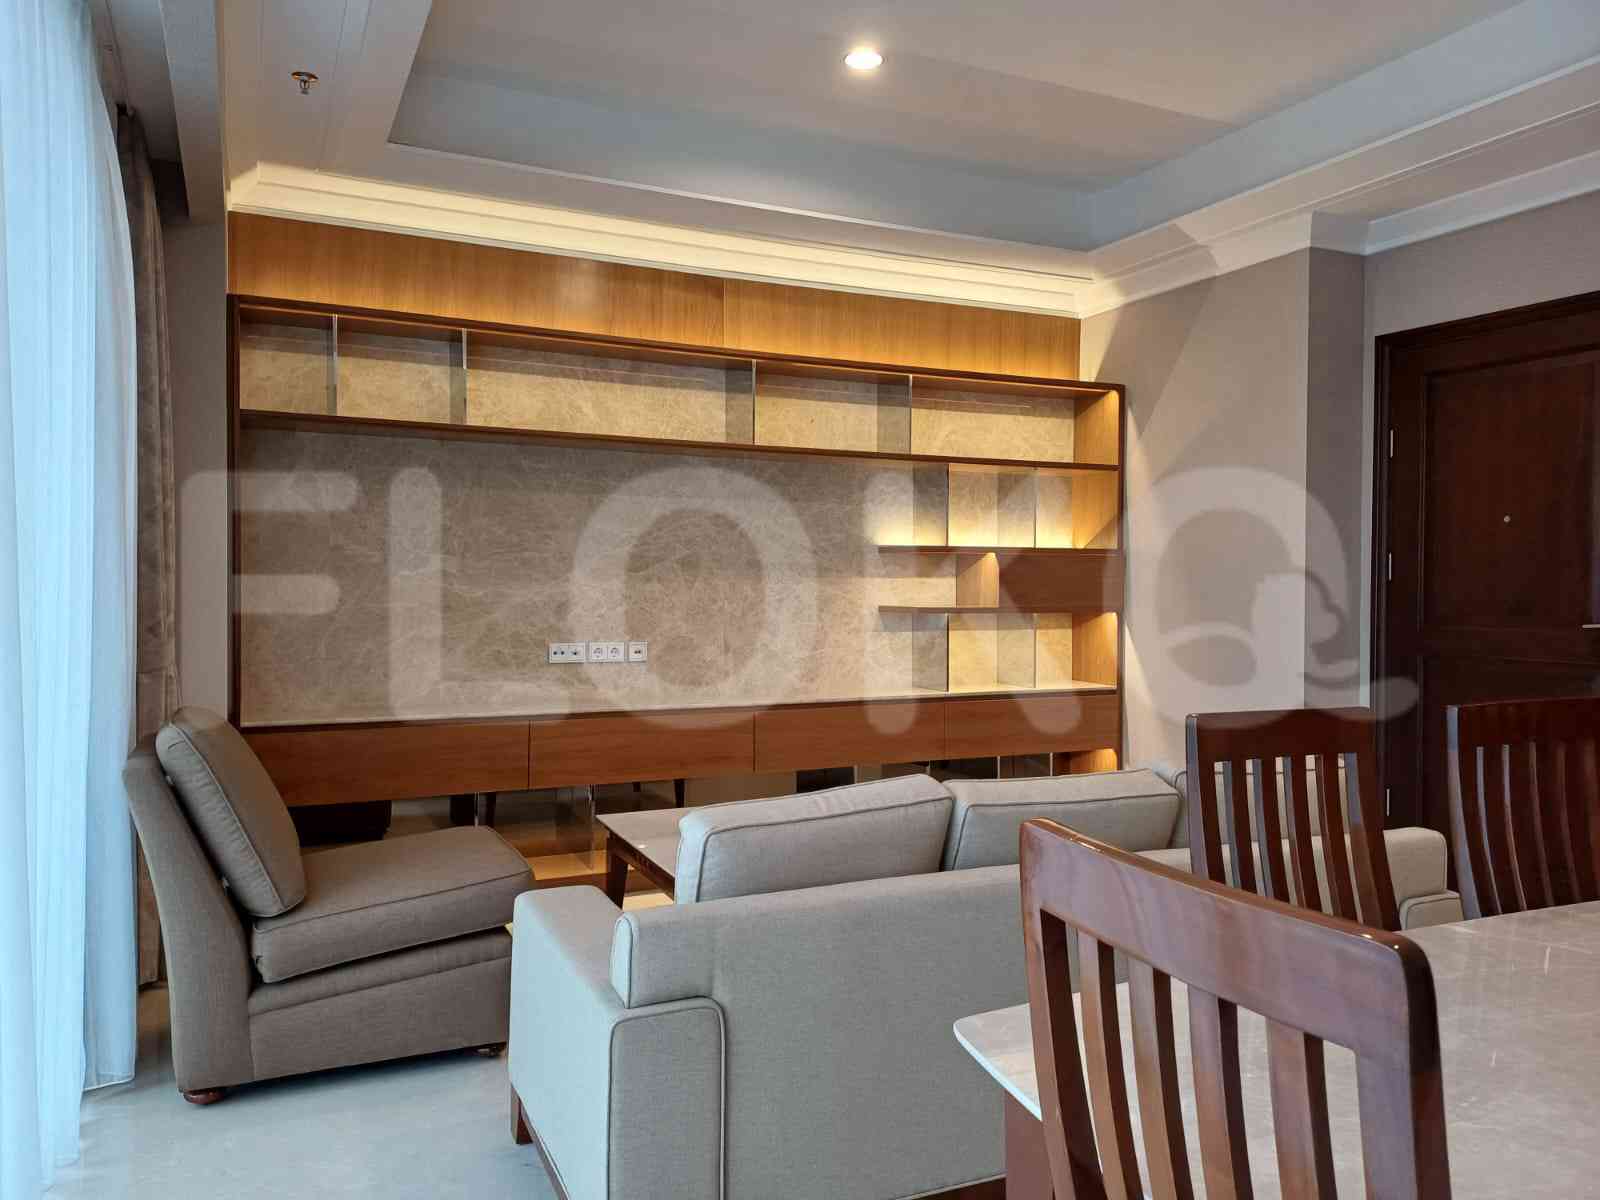 3 Bedroom on 3rd Floor for Rent in Pondok Indah Residence - fpo5ef 1